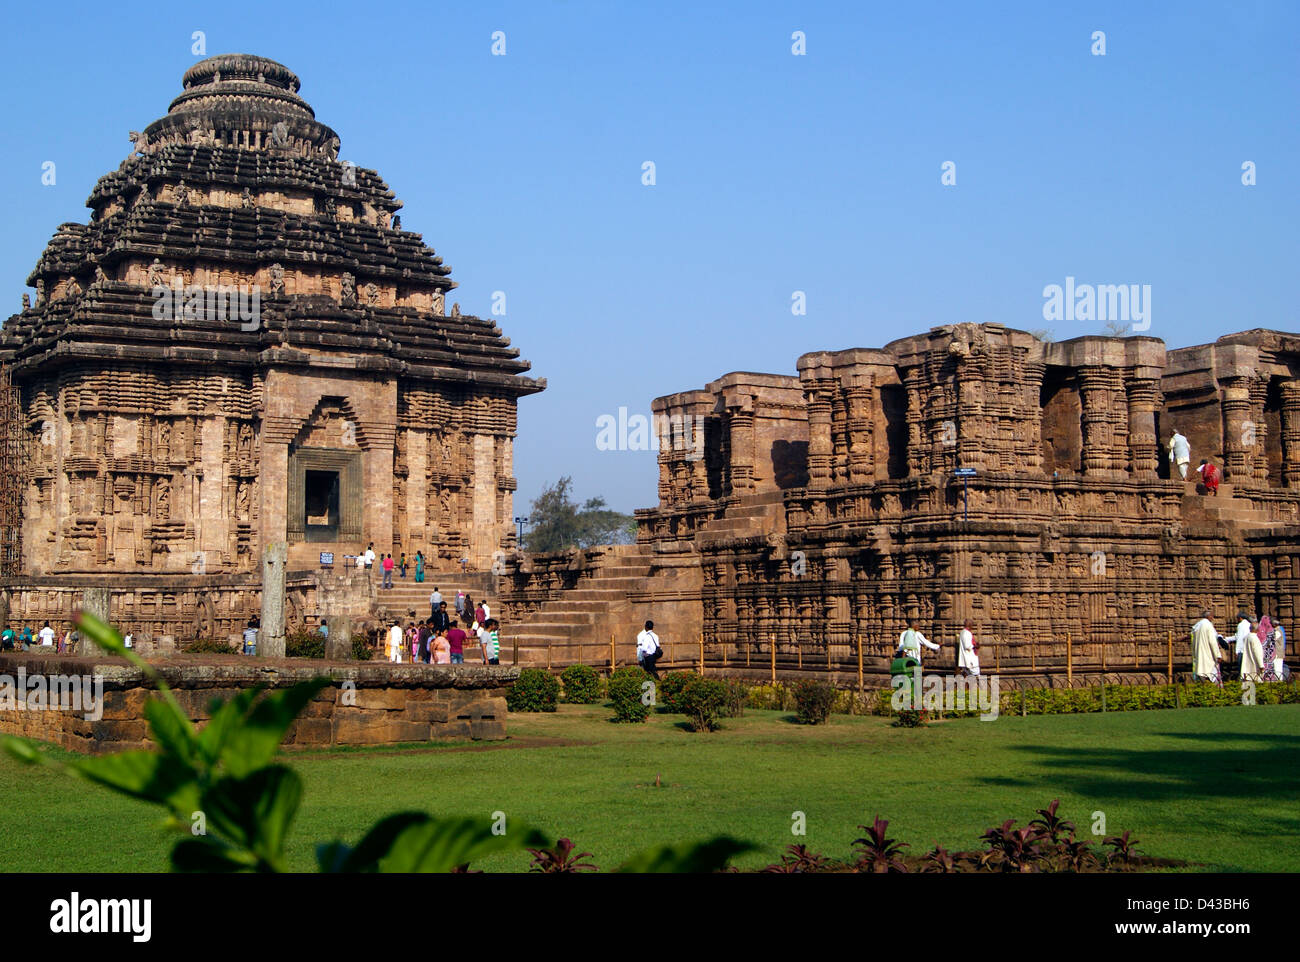 Konark Sun Temple India architecture Scenery View Stock Photo